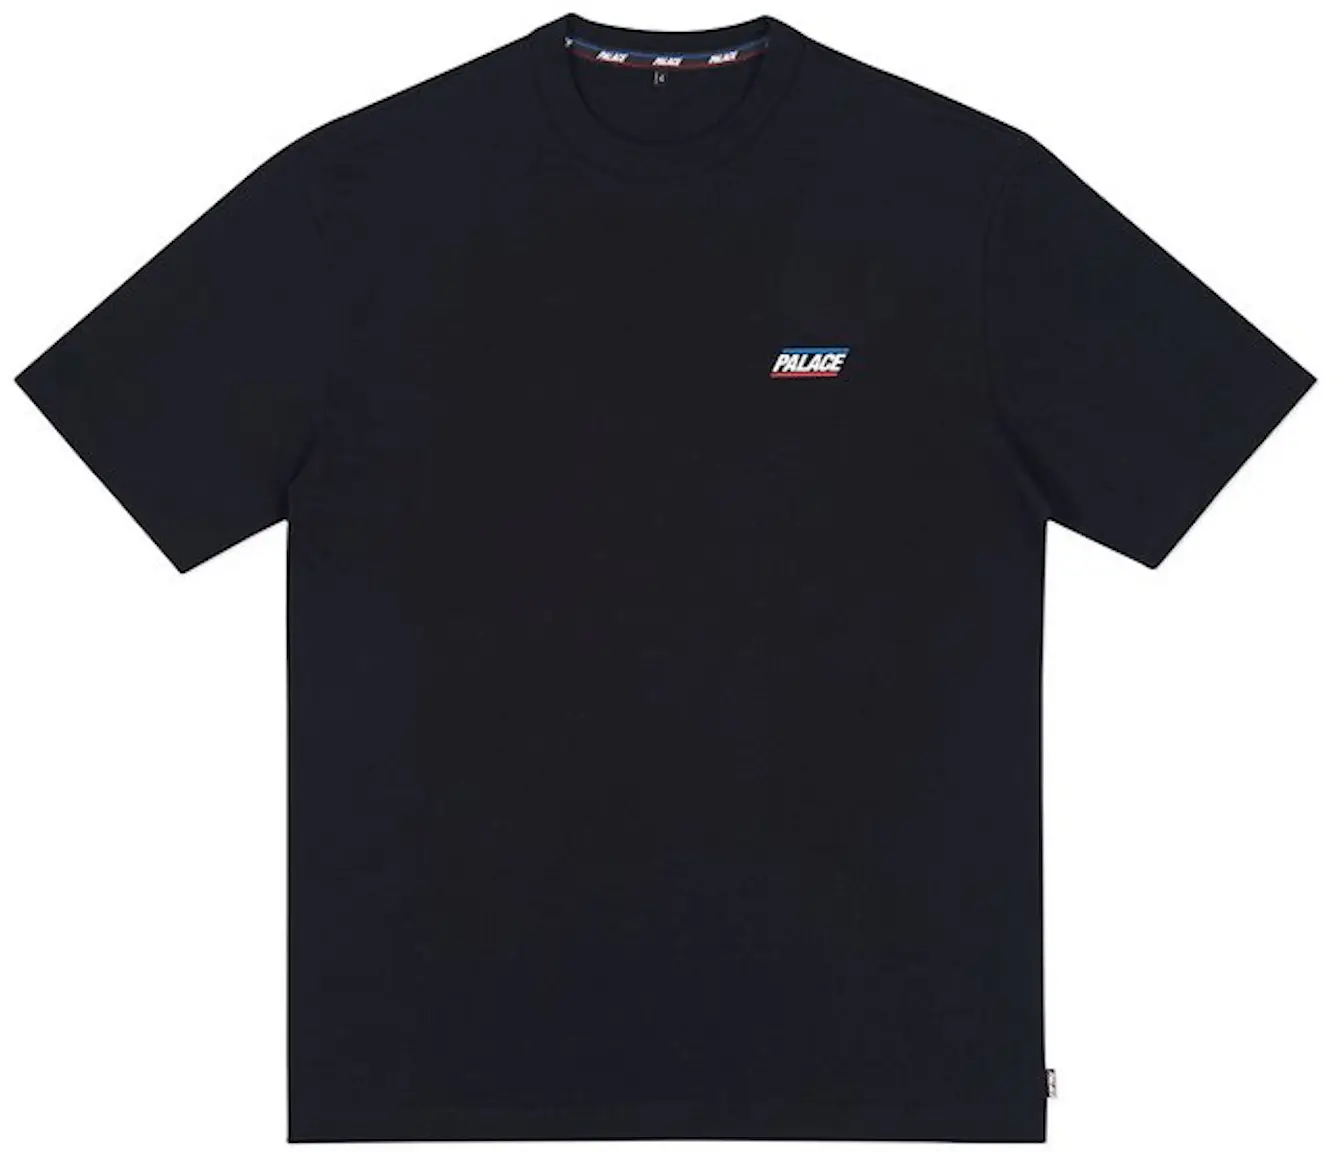 Palace Basically A T-Shirt (FW 20) Black - FW20 - US